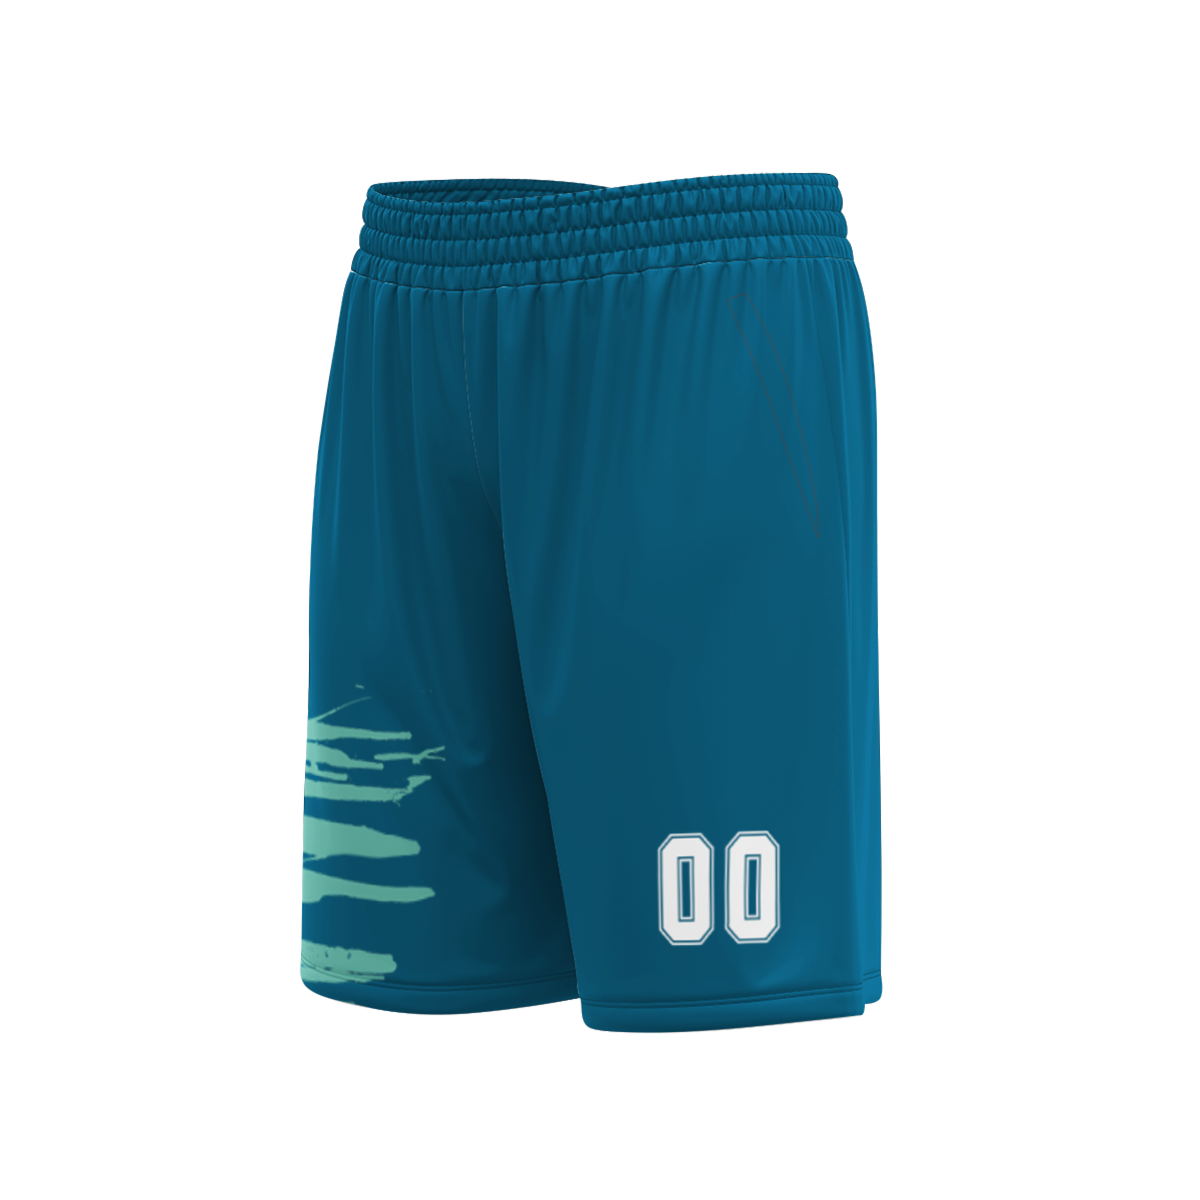 custom-printed-basketball-jerseys-design-sports-jersey-sublimation-comfortable-basketball-wear-uniforms-at-cj-pod-8